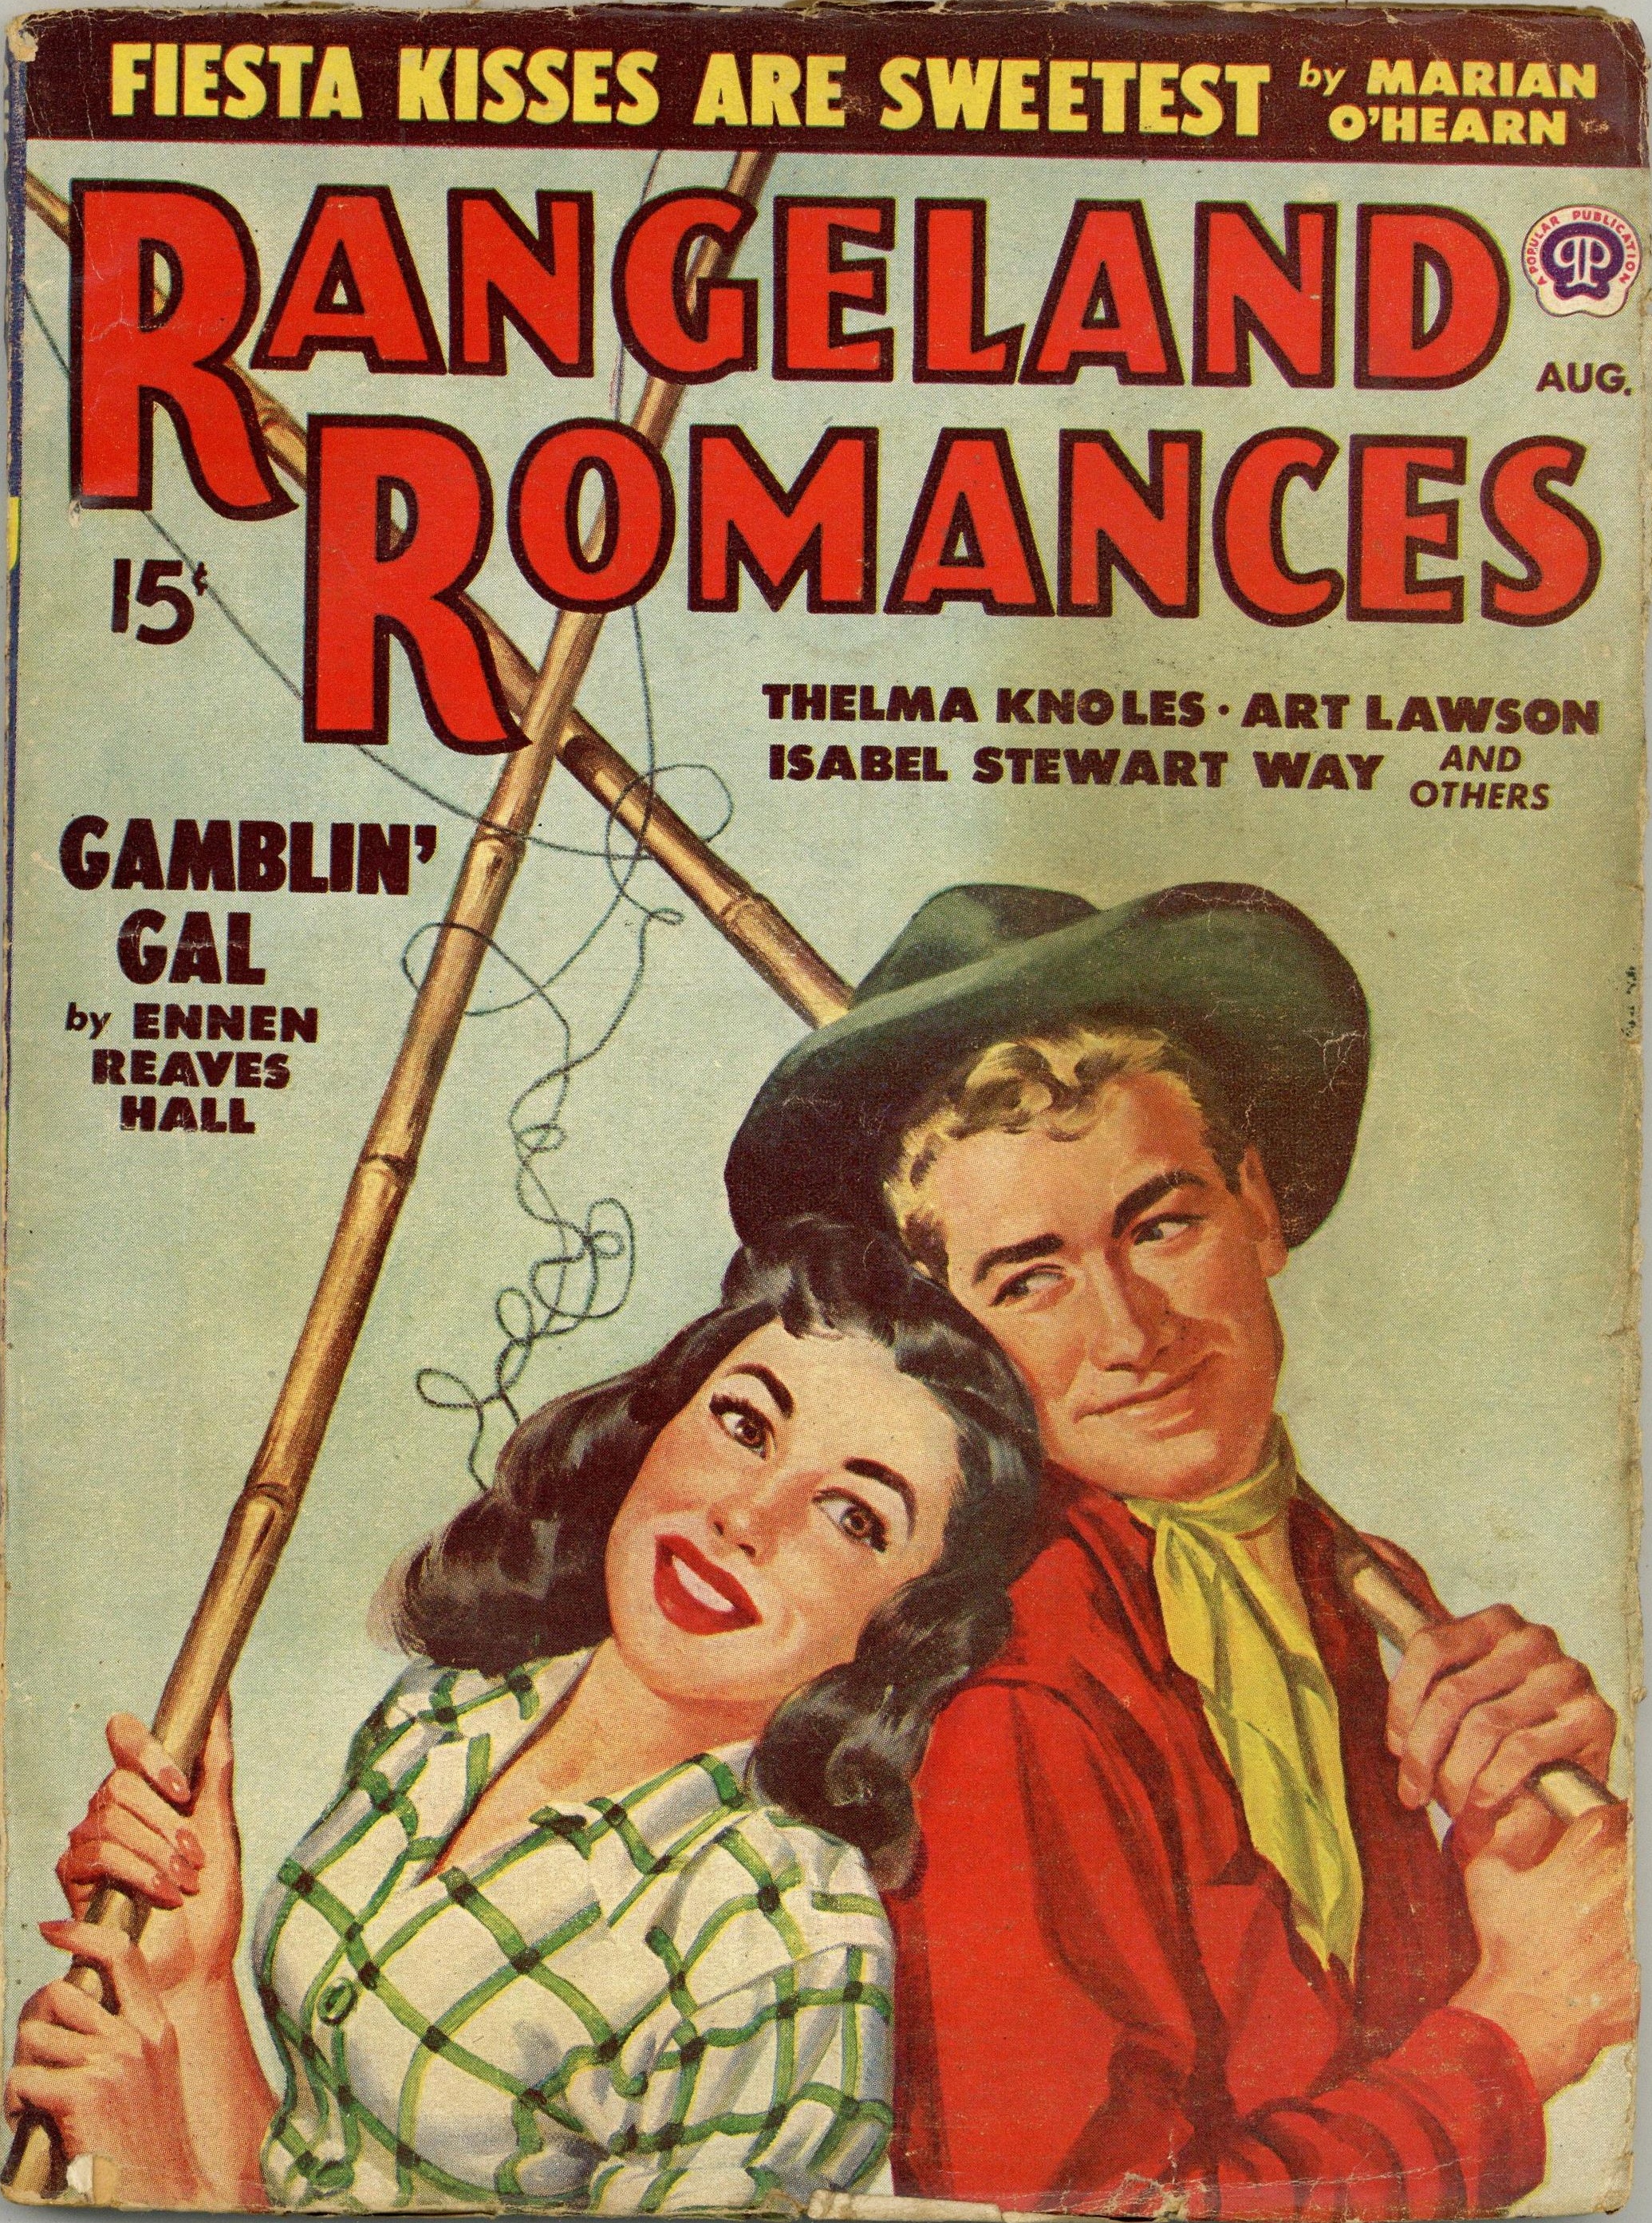 Rangeland Romances August 1948